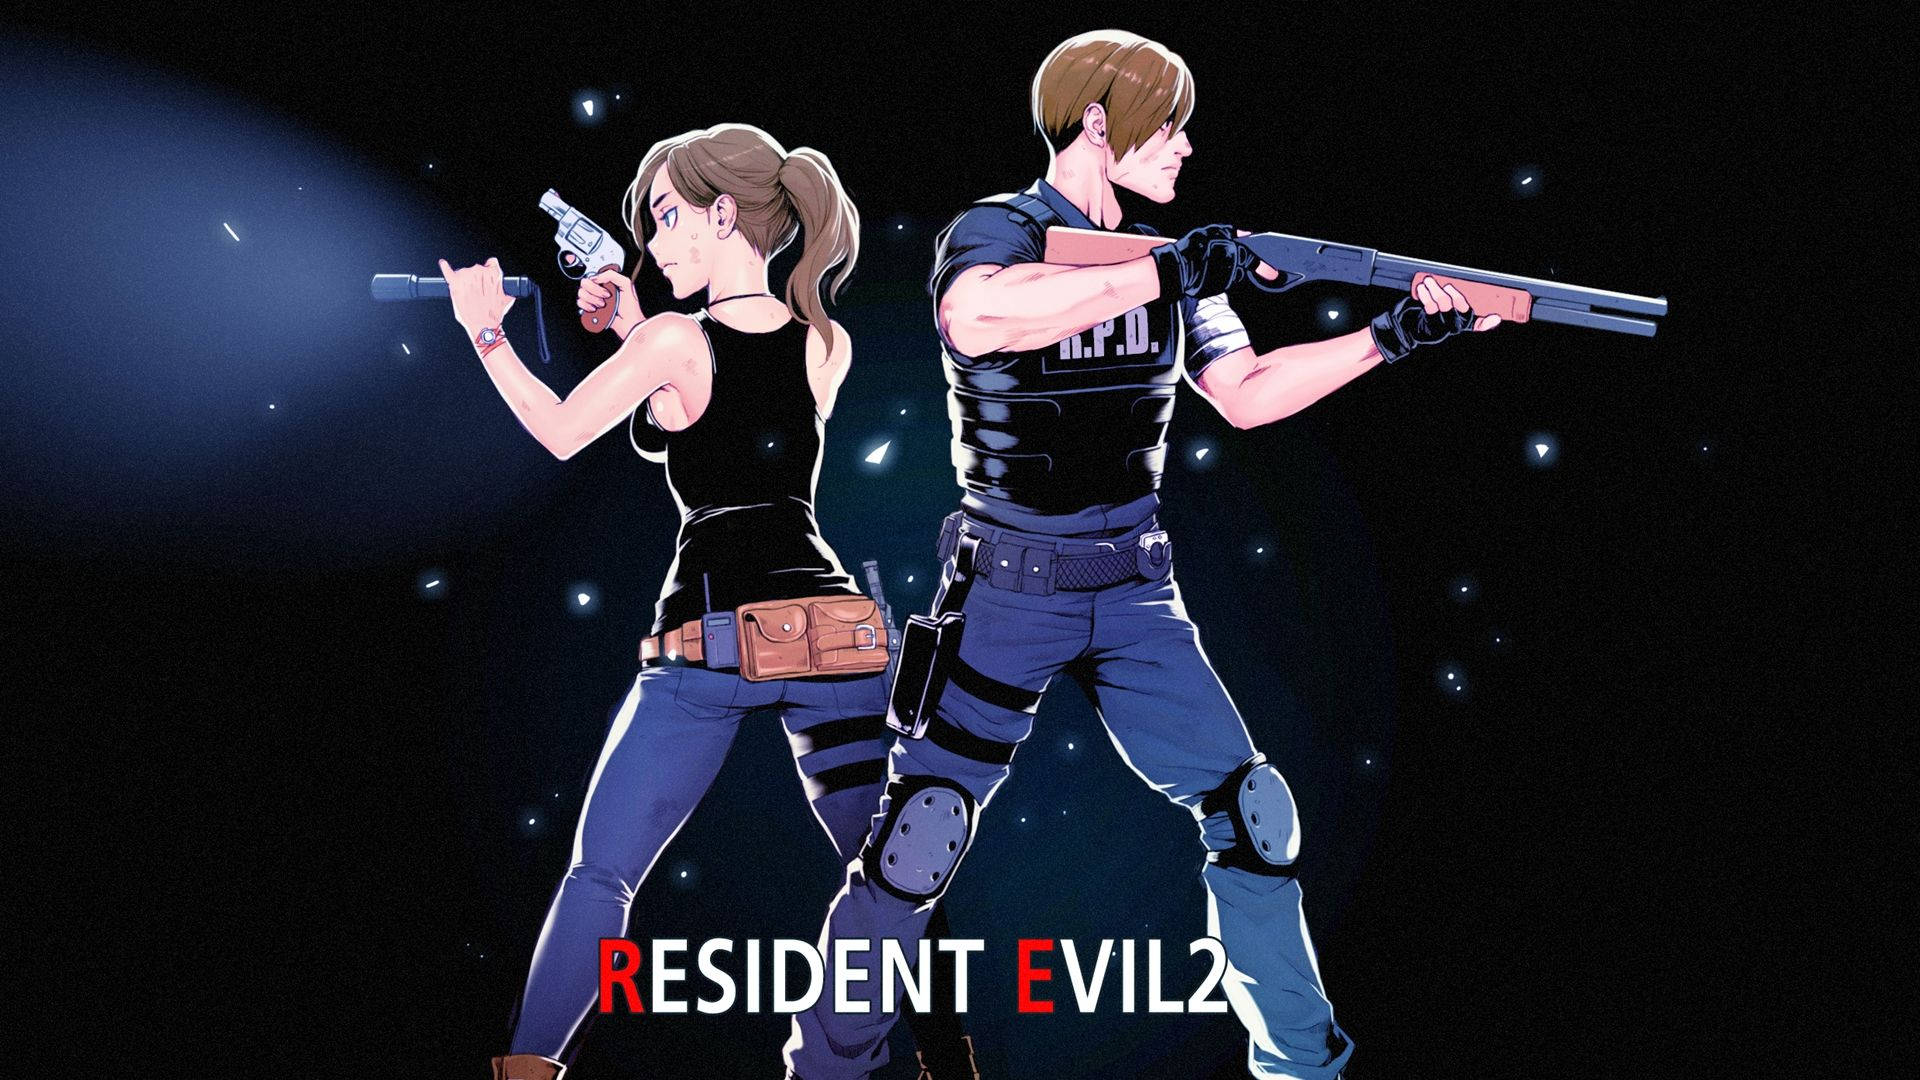 Free Resident Evil 2 Wallpaper Downloads, [100+] Resident Evil 2 Wallpapers  for FREE 